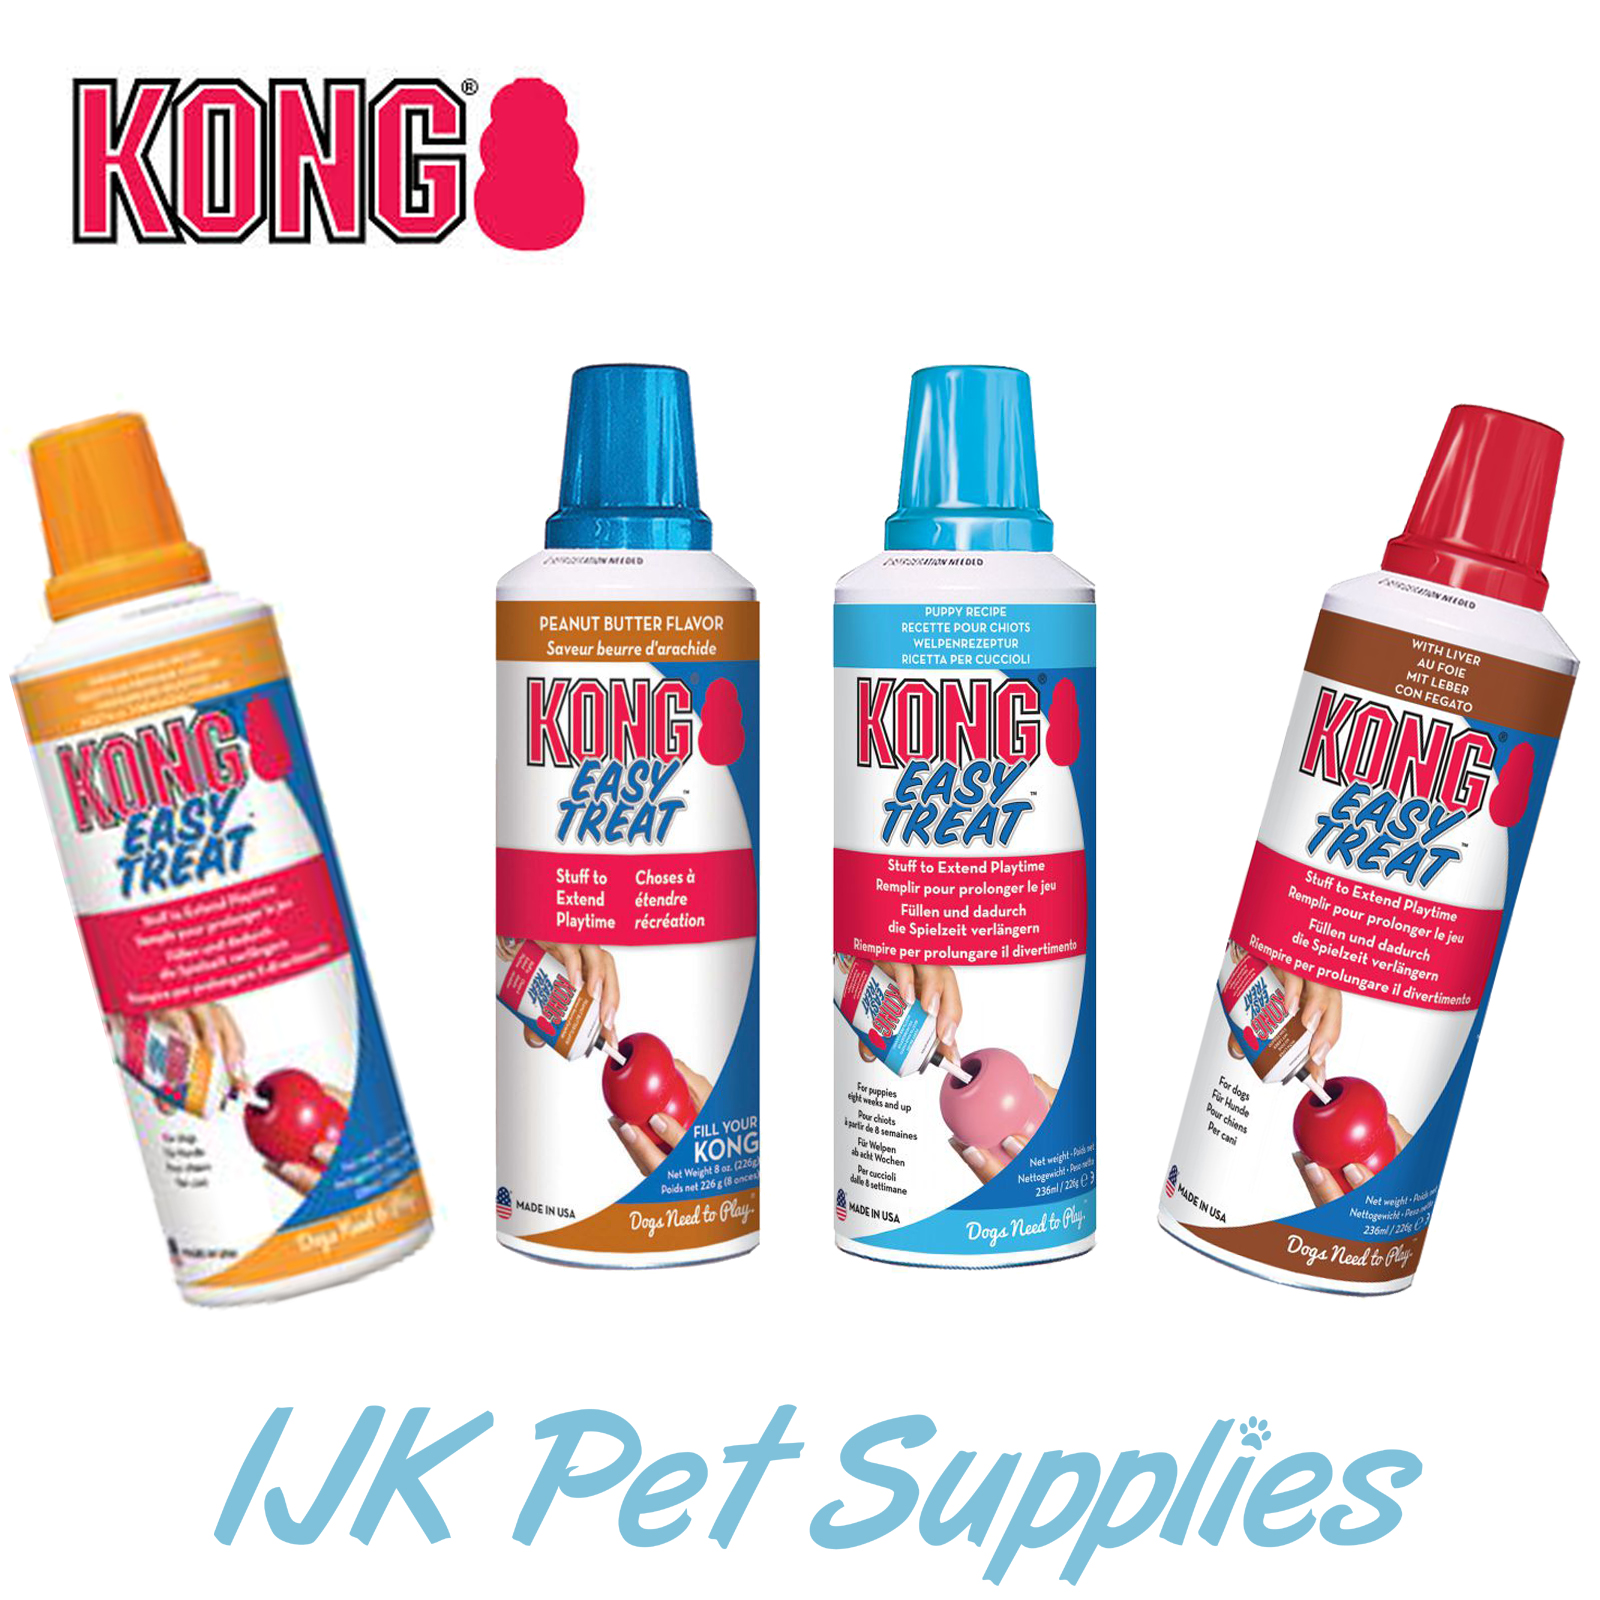 KONG Easy Treat - IJK Pet Supplies